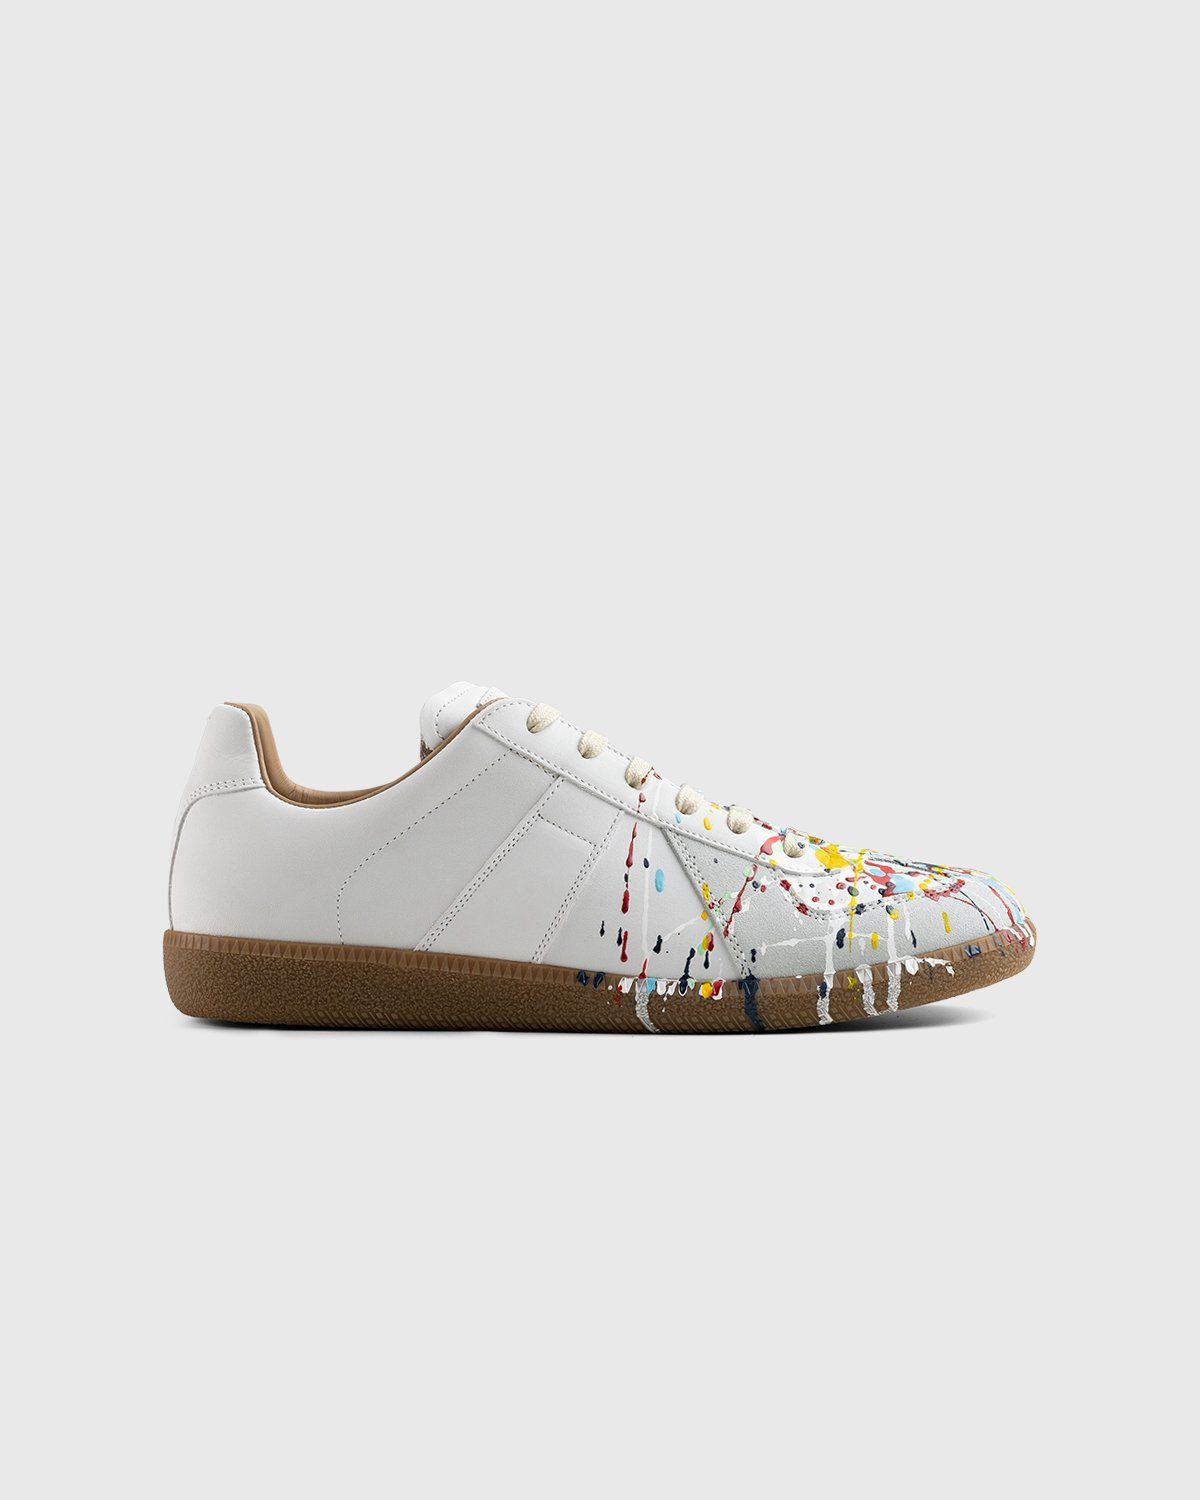 Maison Margiela – Replica Paint Drop Sneakers White | Highsnobiety Shop